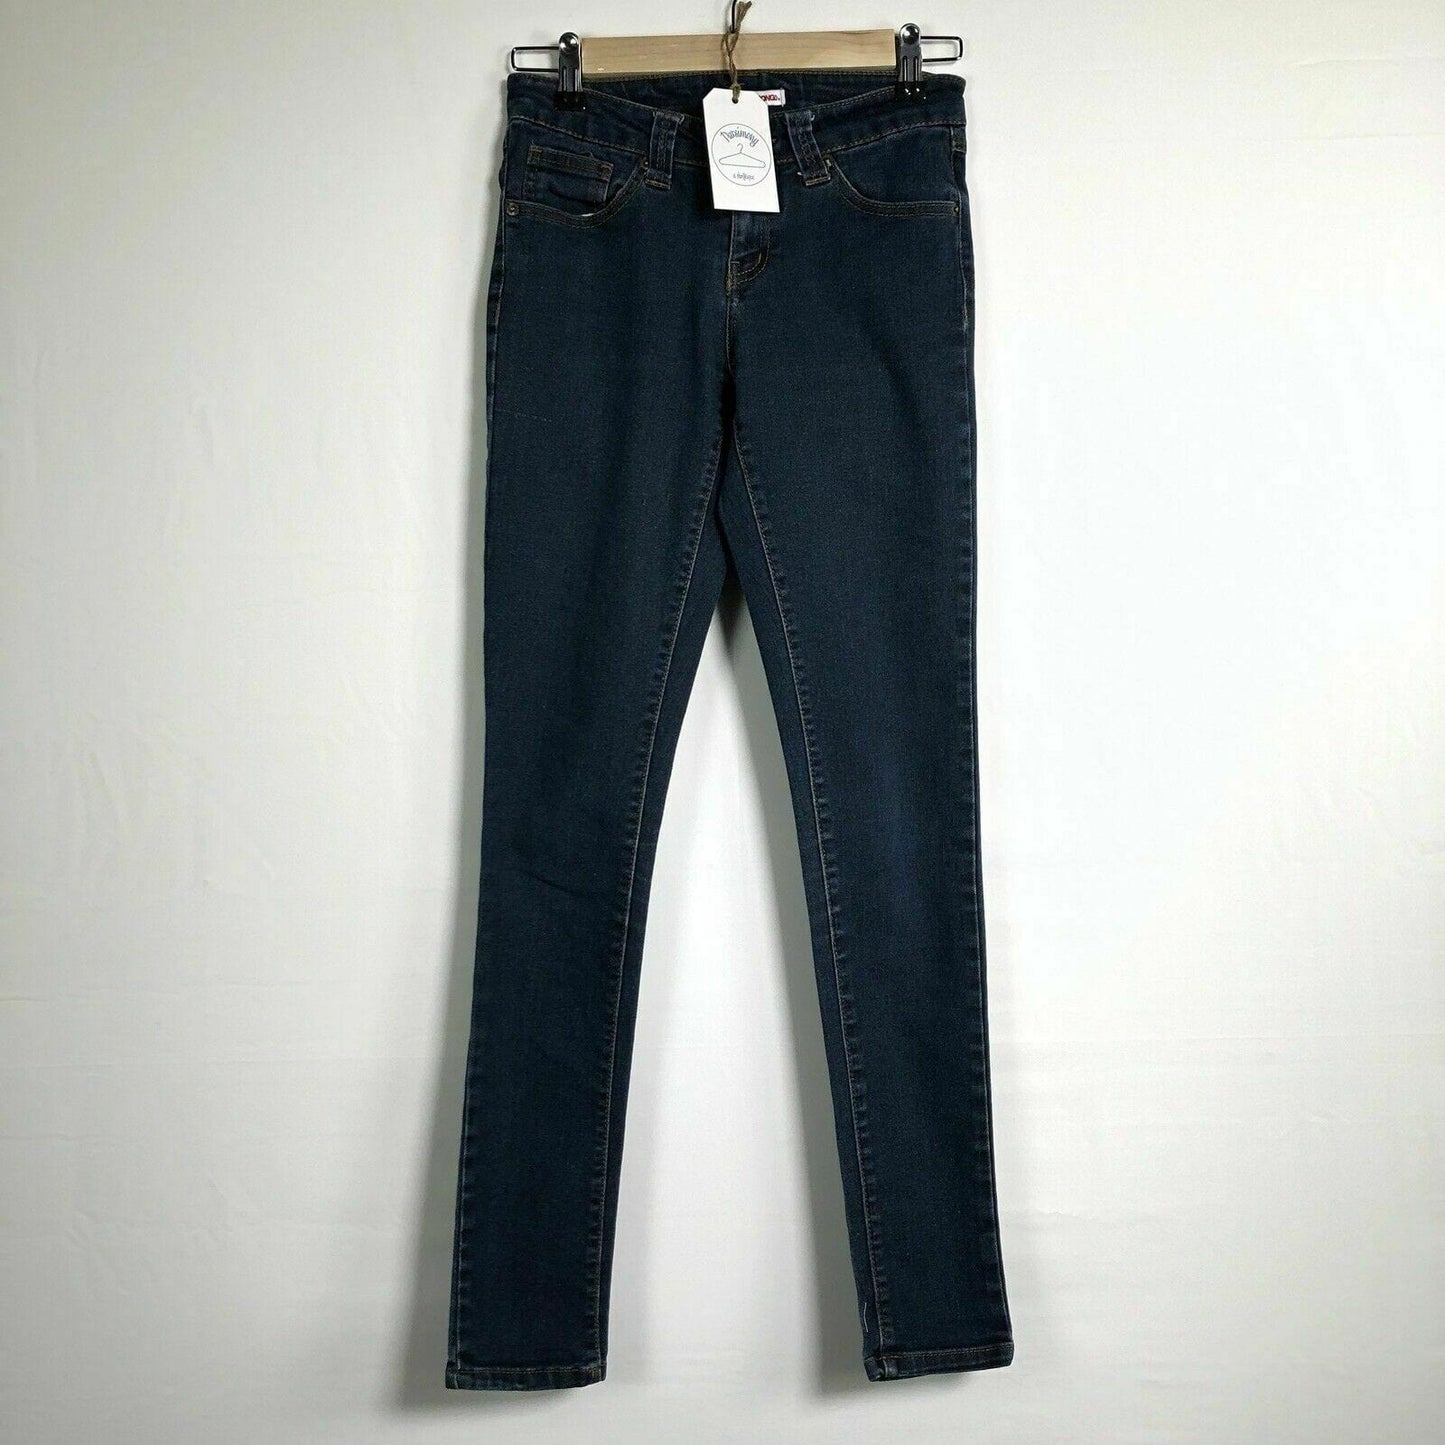 Bongo Womens Super Skinny Denim Jeans, Dark Blue Wash - Size 1